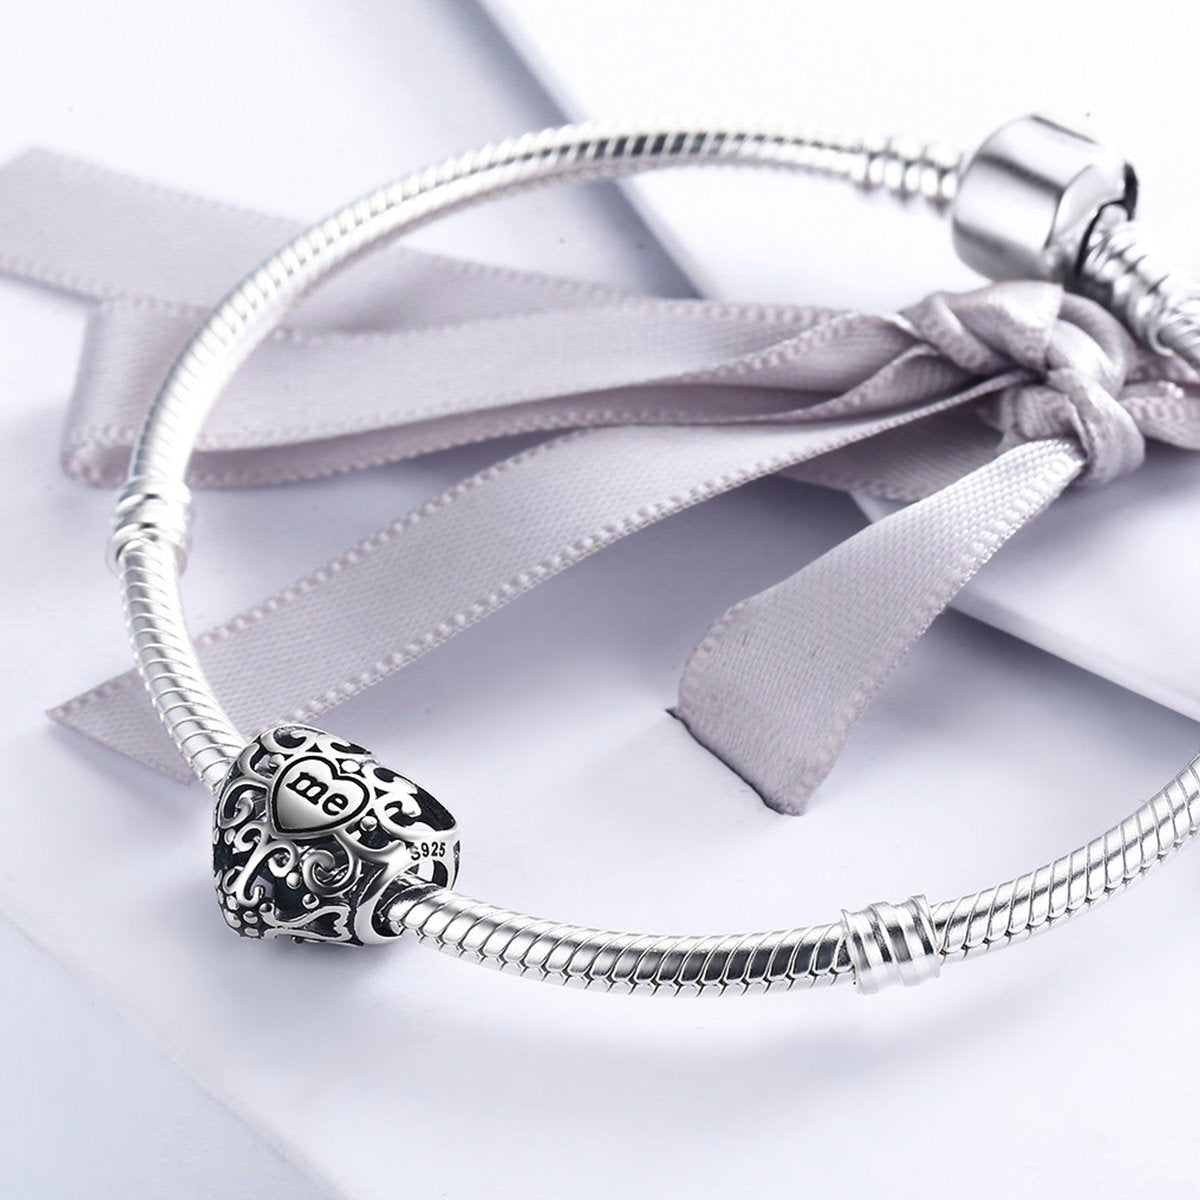 Sterling 925 silver charm heart me bead pendant fits Pandora charm and European charm bracelet Xaxe.com